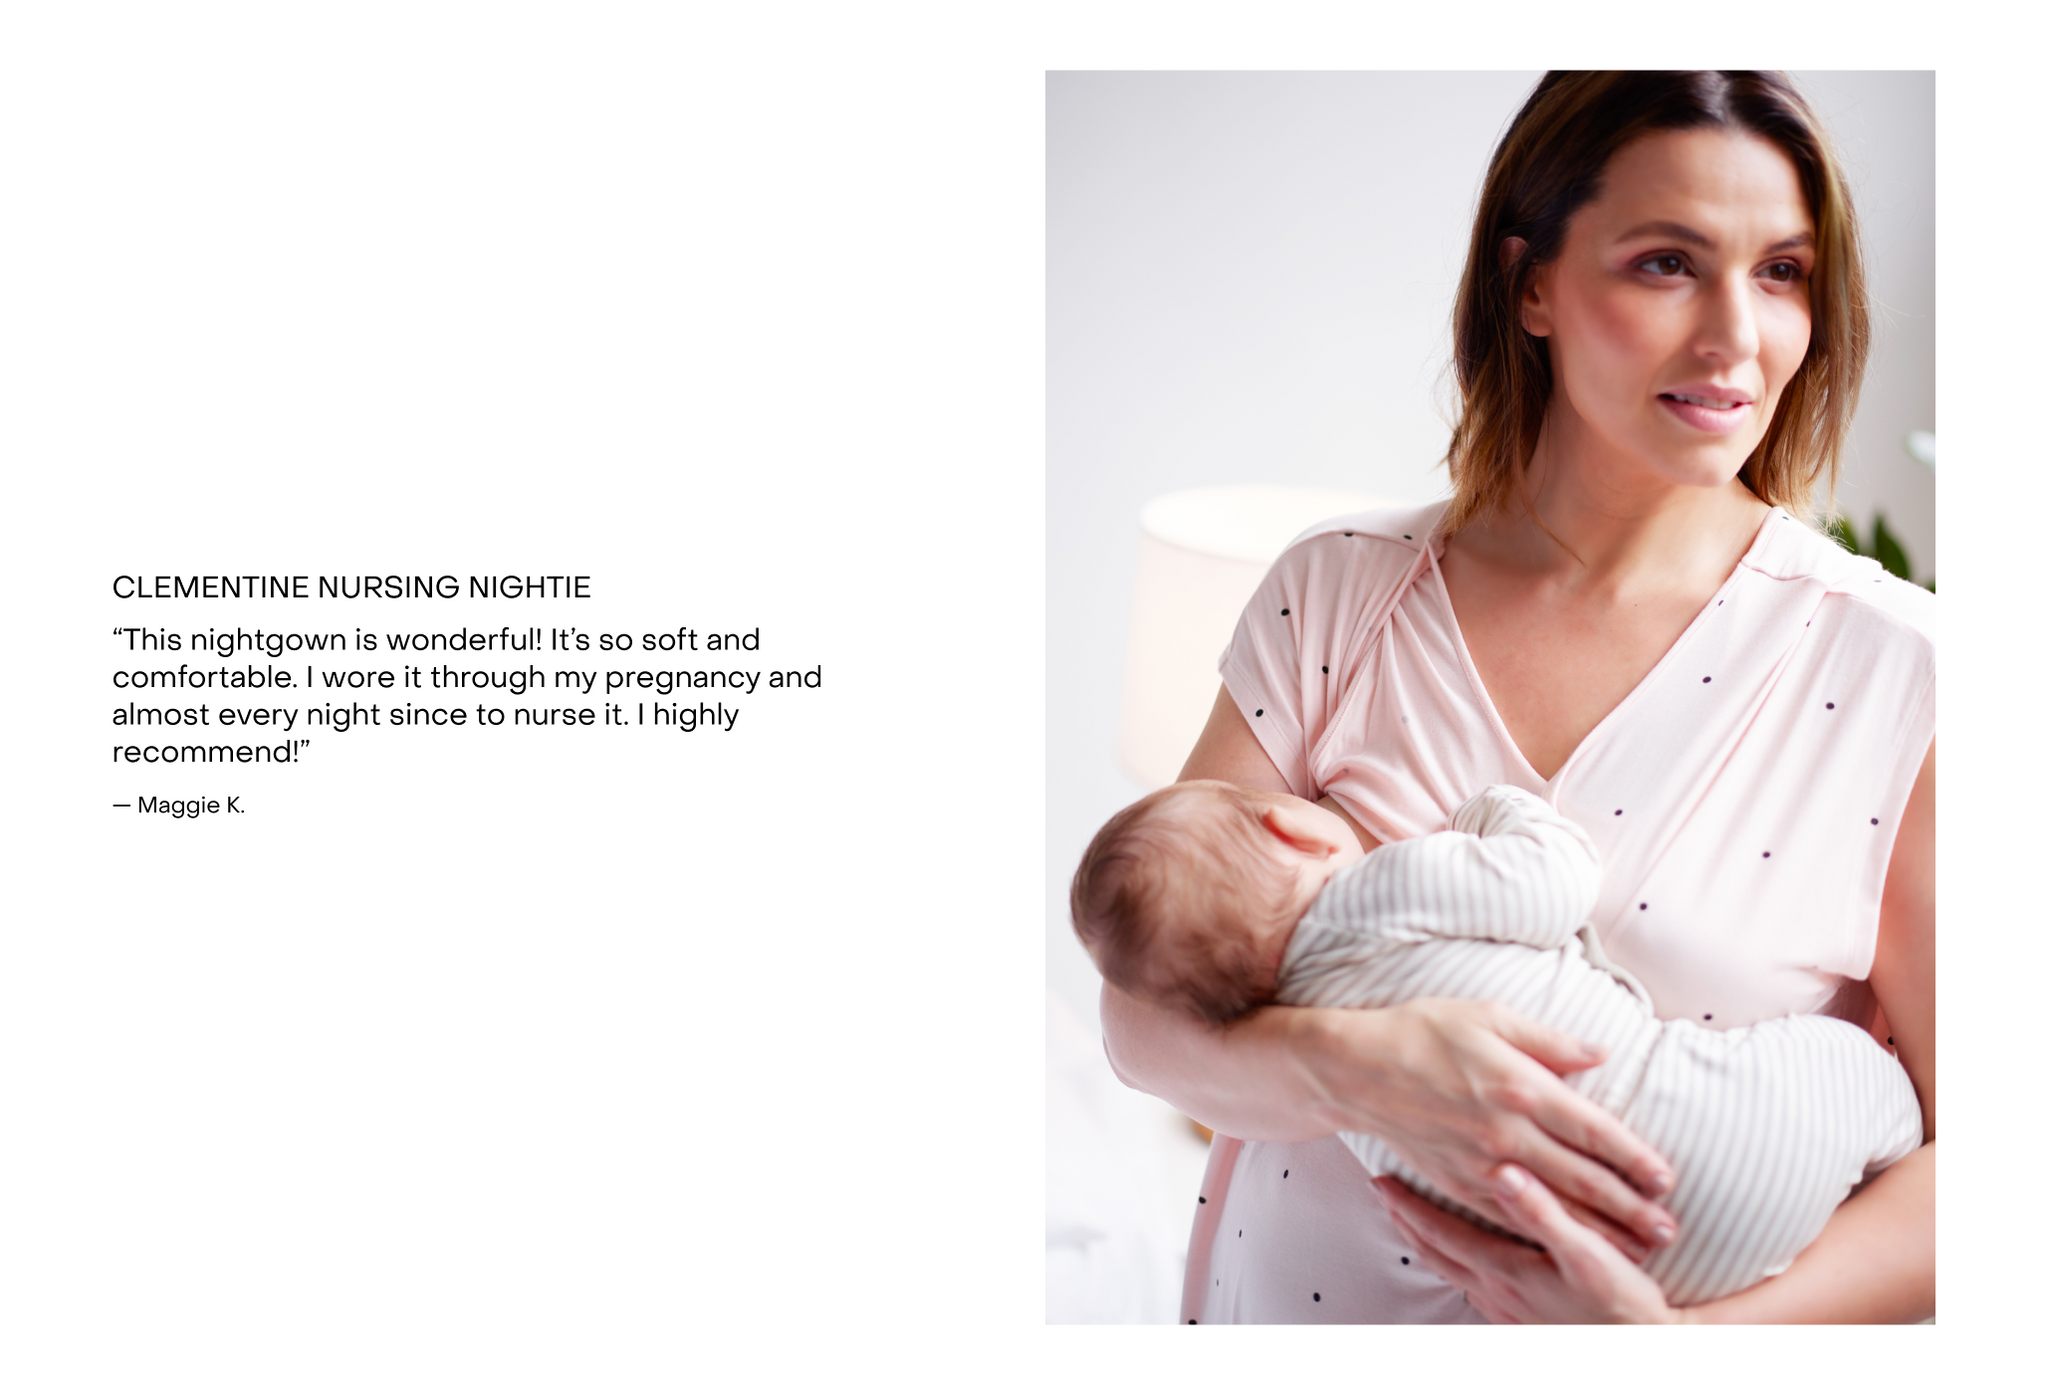 Maternity Nursing Top Green Mamalicious Anabel, Maternity & More, Maternity Wear